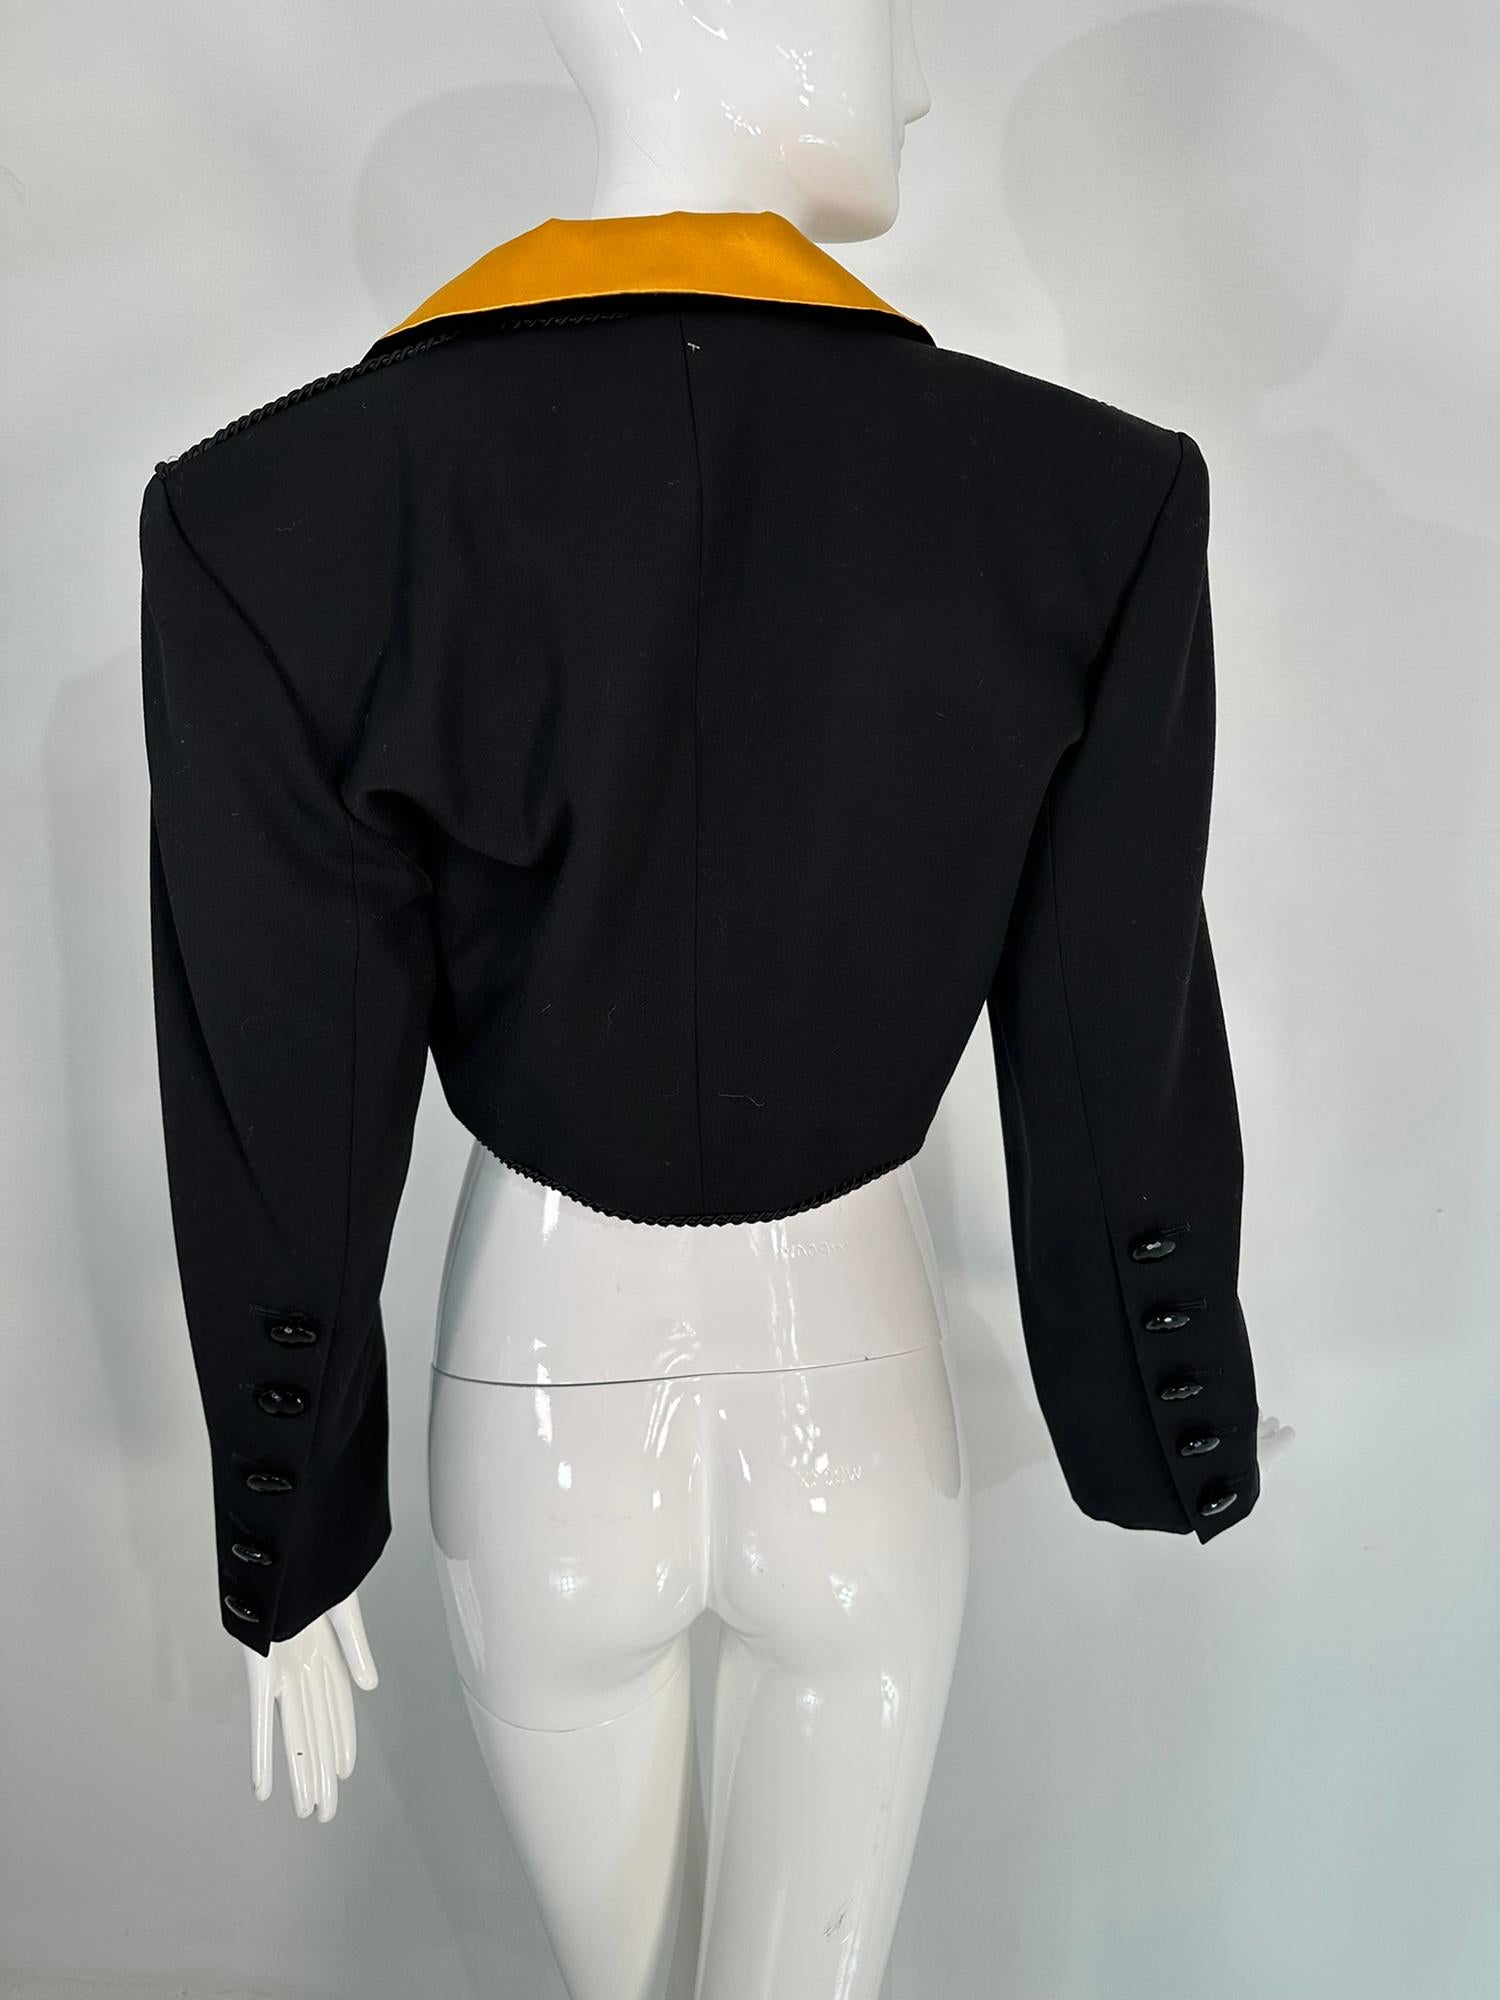 Yves Saint Laurent Rive Gauche Black Sequin Yellow Satin Cropped Jacket 1990s For Sale 5